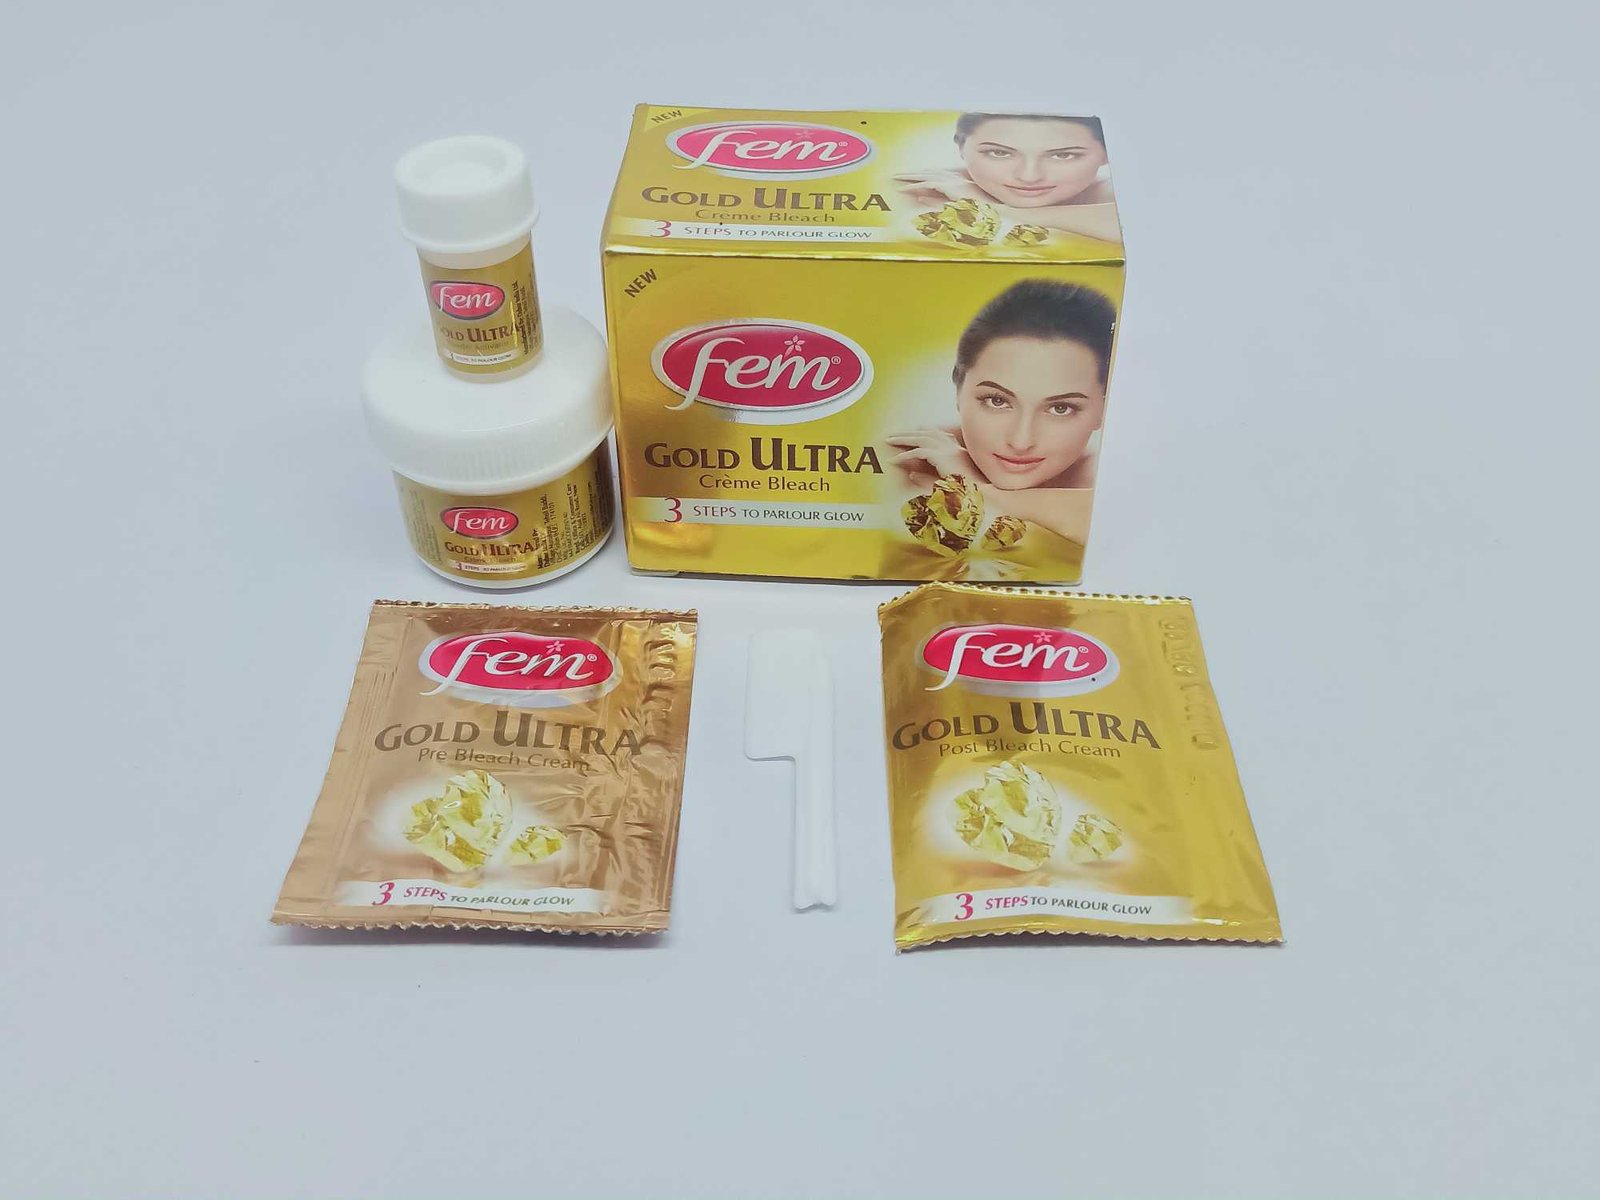 Fem Gold Ultra Creme Bleach 3 Steps to Parlour Glow, 10 gram